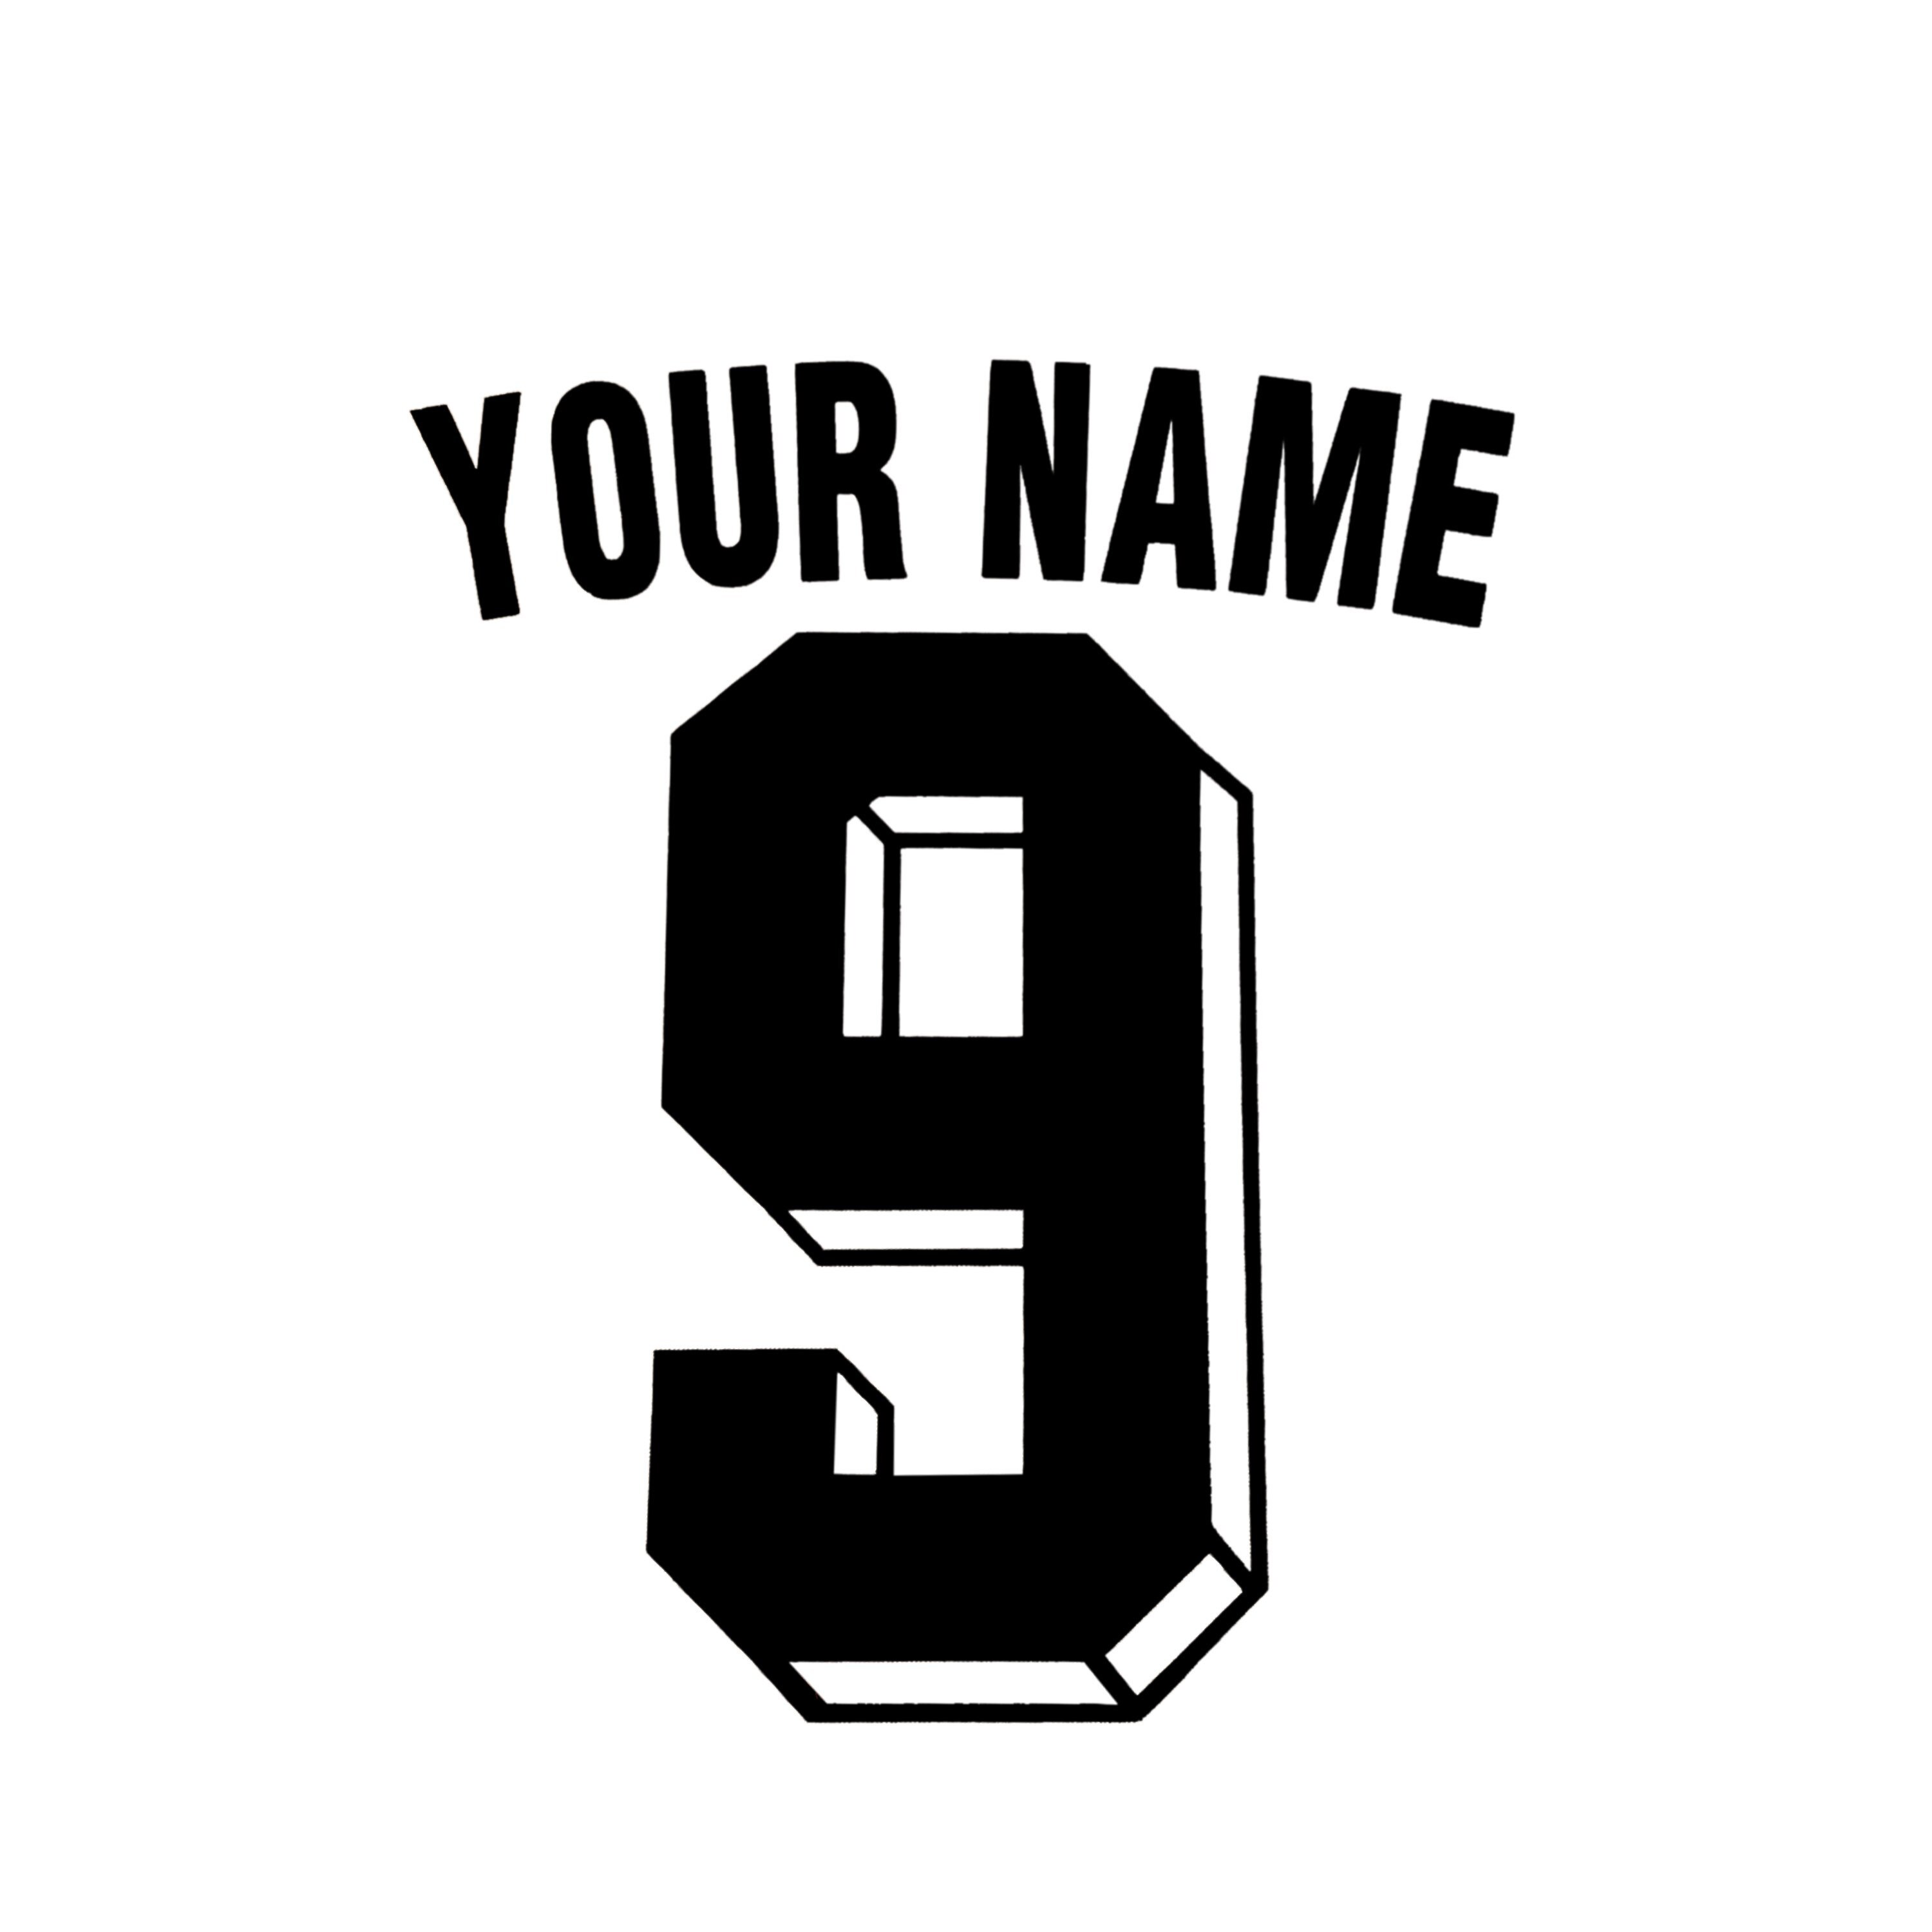 MLS Font 2008-  Numbers font, Lettering fonts, Lettering